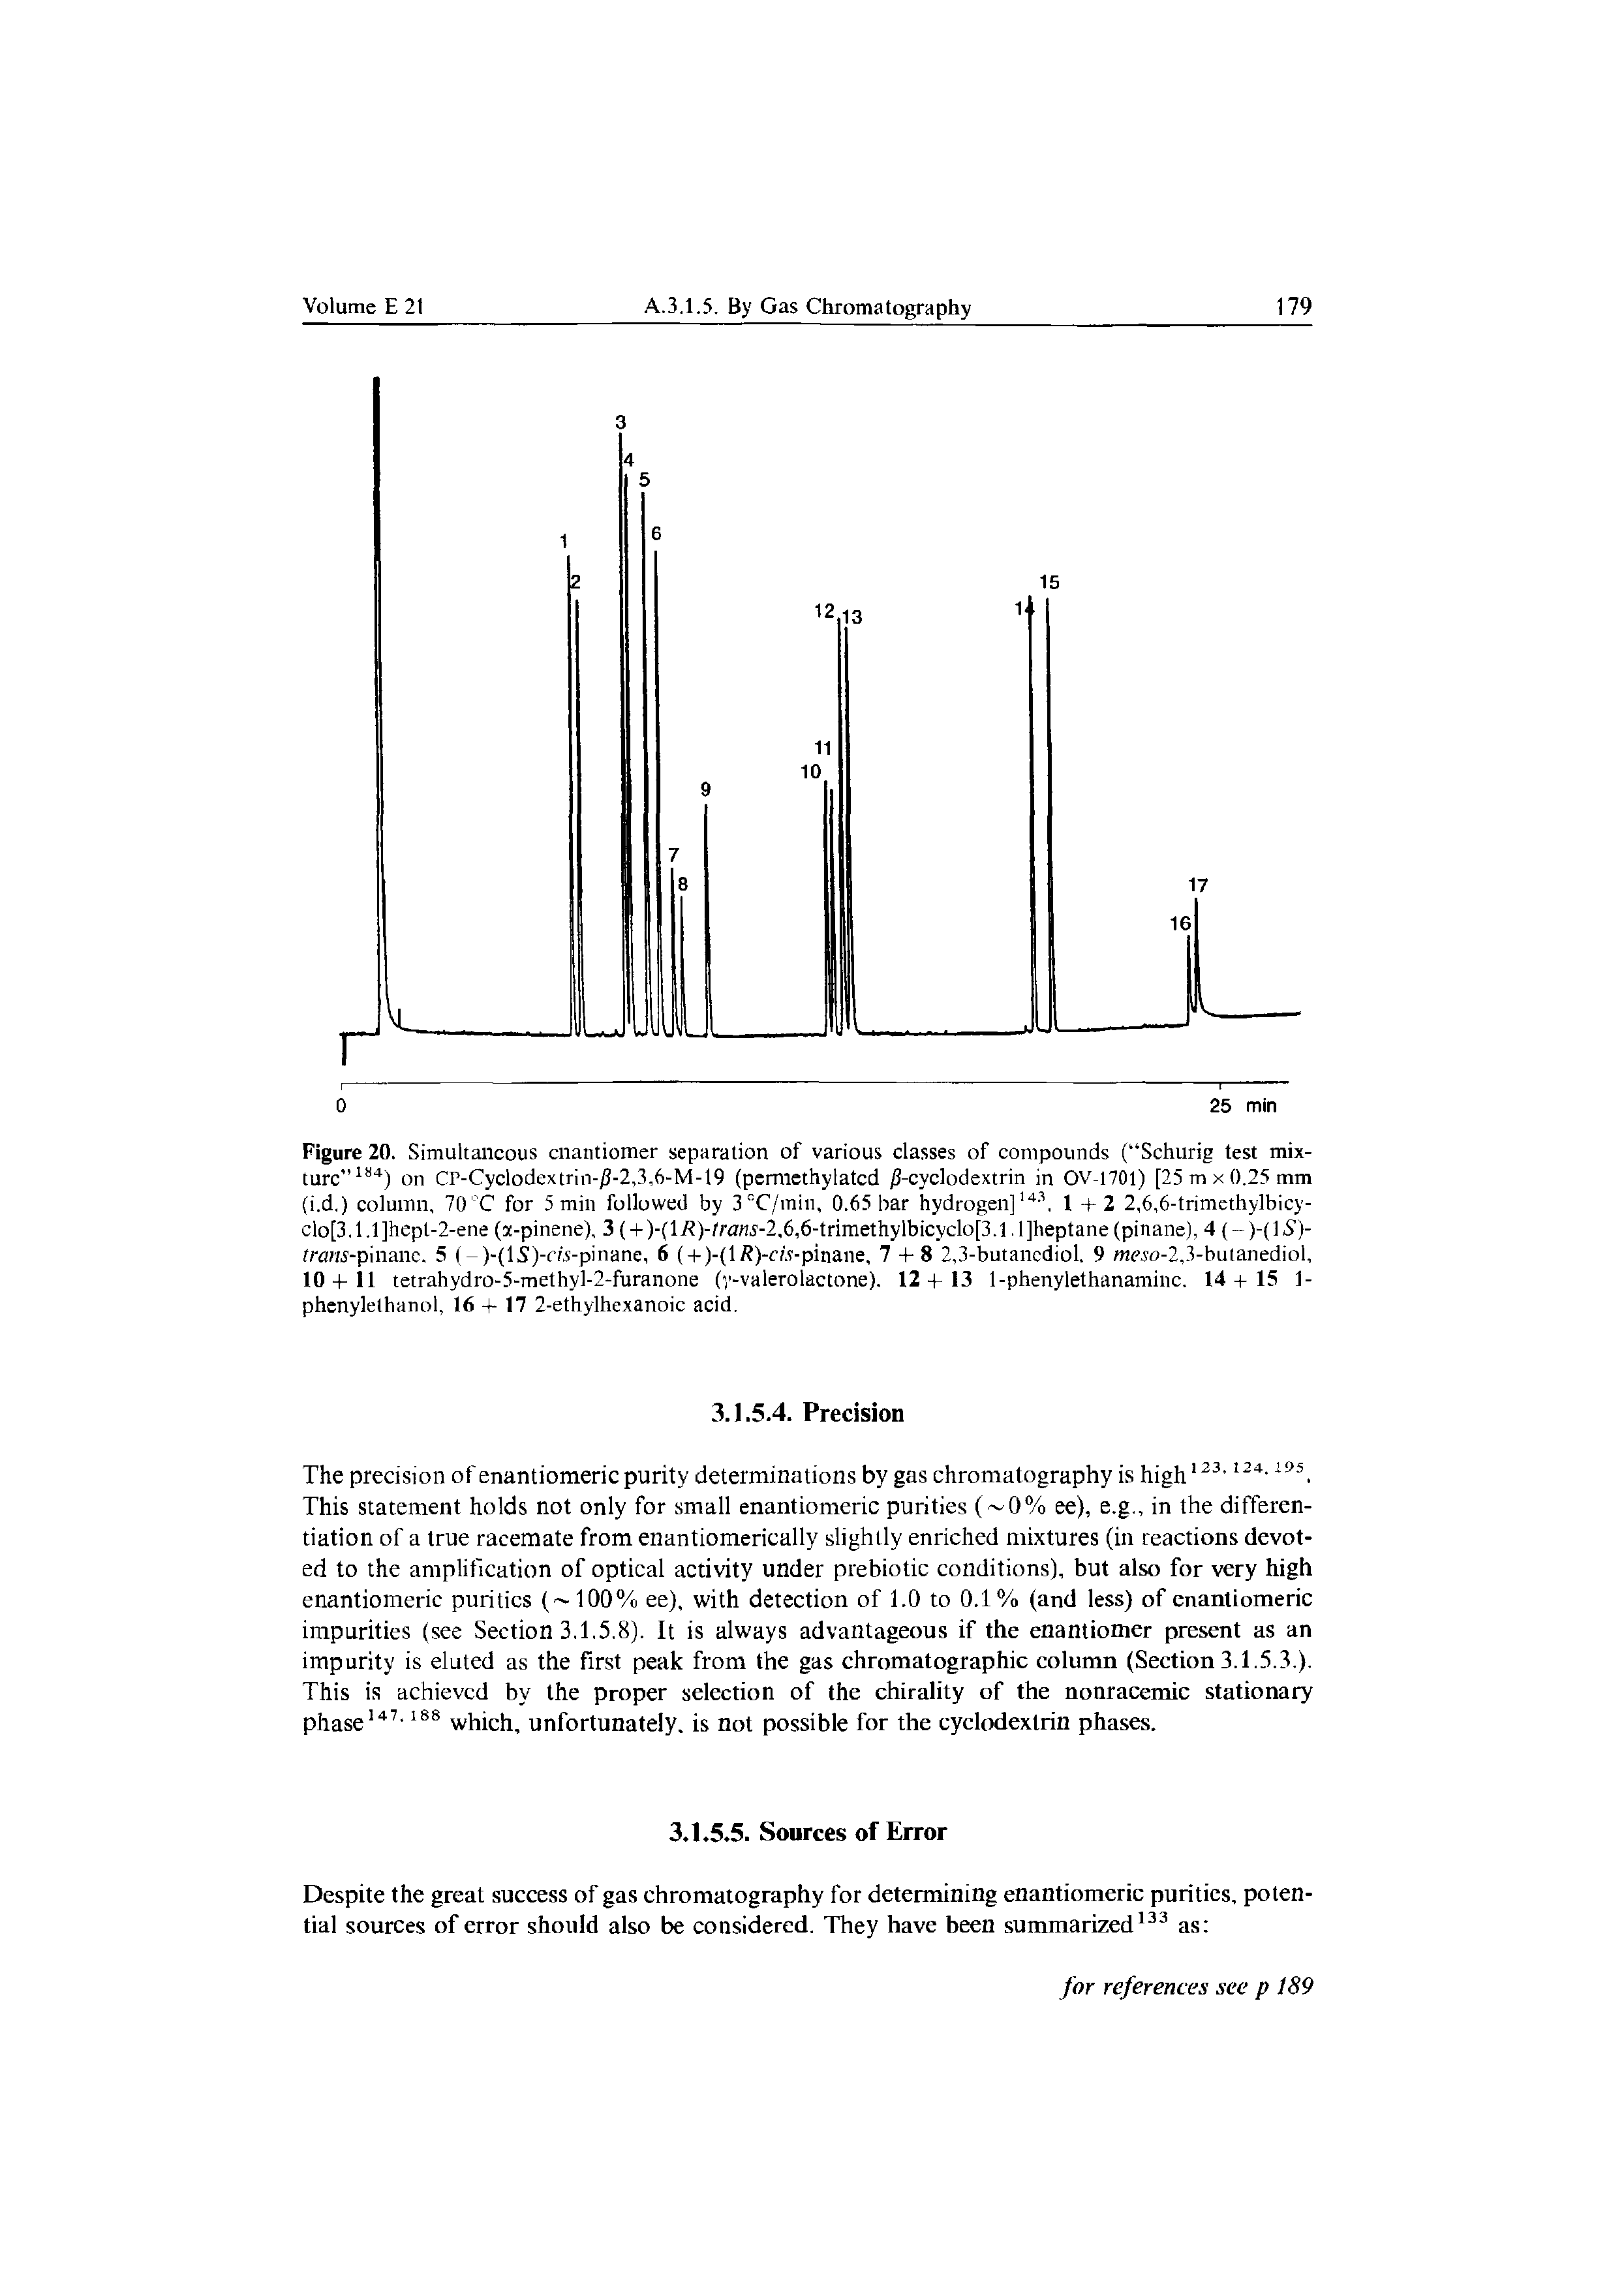 Figure 20. Simultaneous enantiomer separation of various classes of compounds ( Schurig test mixture 184) on CP-Cyclodextrin-/3-2,3,6-M-19 (permethylatcd /3-cyclodextrin in OV-1701) [25 m x 0.25 mm (i.d.) column, 70°C for 5 min followed by 3cC/miu, 0.65 bar hydrogen]143. 1+2 2,6,6-trimethylbicy-clo[3.1.1]hept-2-ene (x-pinene), 3 ( + )-(lJR)-//ms-2,6,6-trimethylbicyclo[3.1. l]heptane (pinane), 4 (-)-(lS )-fra/M-pinanc. 5 (-)-(lS)-fw-pinane, 6 ( + )-(l/J)-cw-pinane, 7 + 8 2,3-butancdiol. 9 meso-2,3-butanediol, 10 + 11 tetrahydro-5-methyl-2-furanone (y-valerolactone). 12 + 13 1-phenylethanaminc. 14 + 15 1-phenylethanol, 16 + 17 2-ethylhexanoic acid.